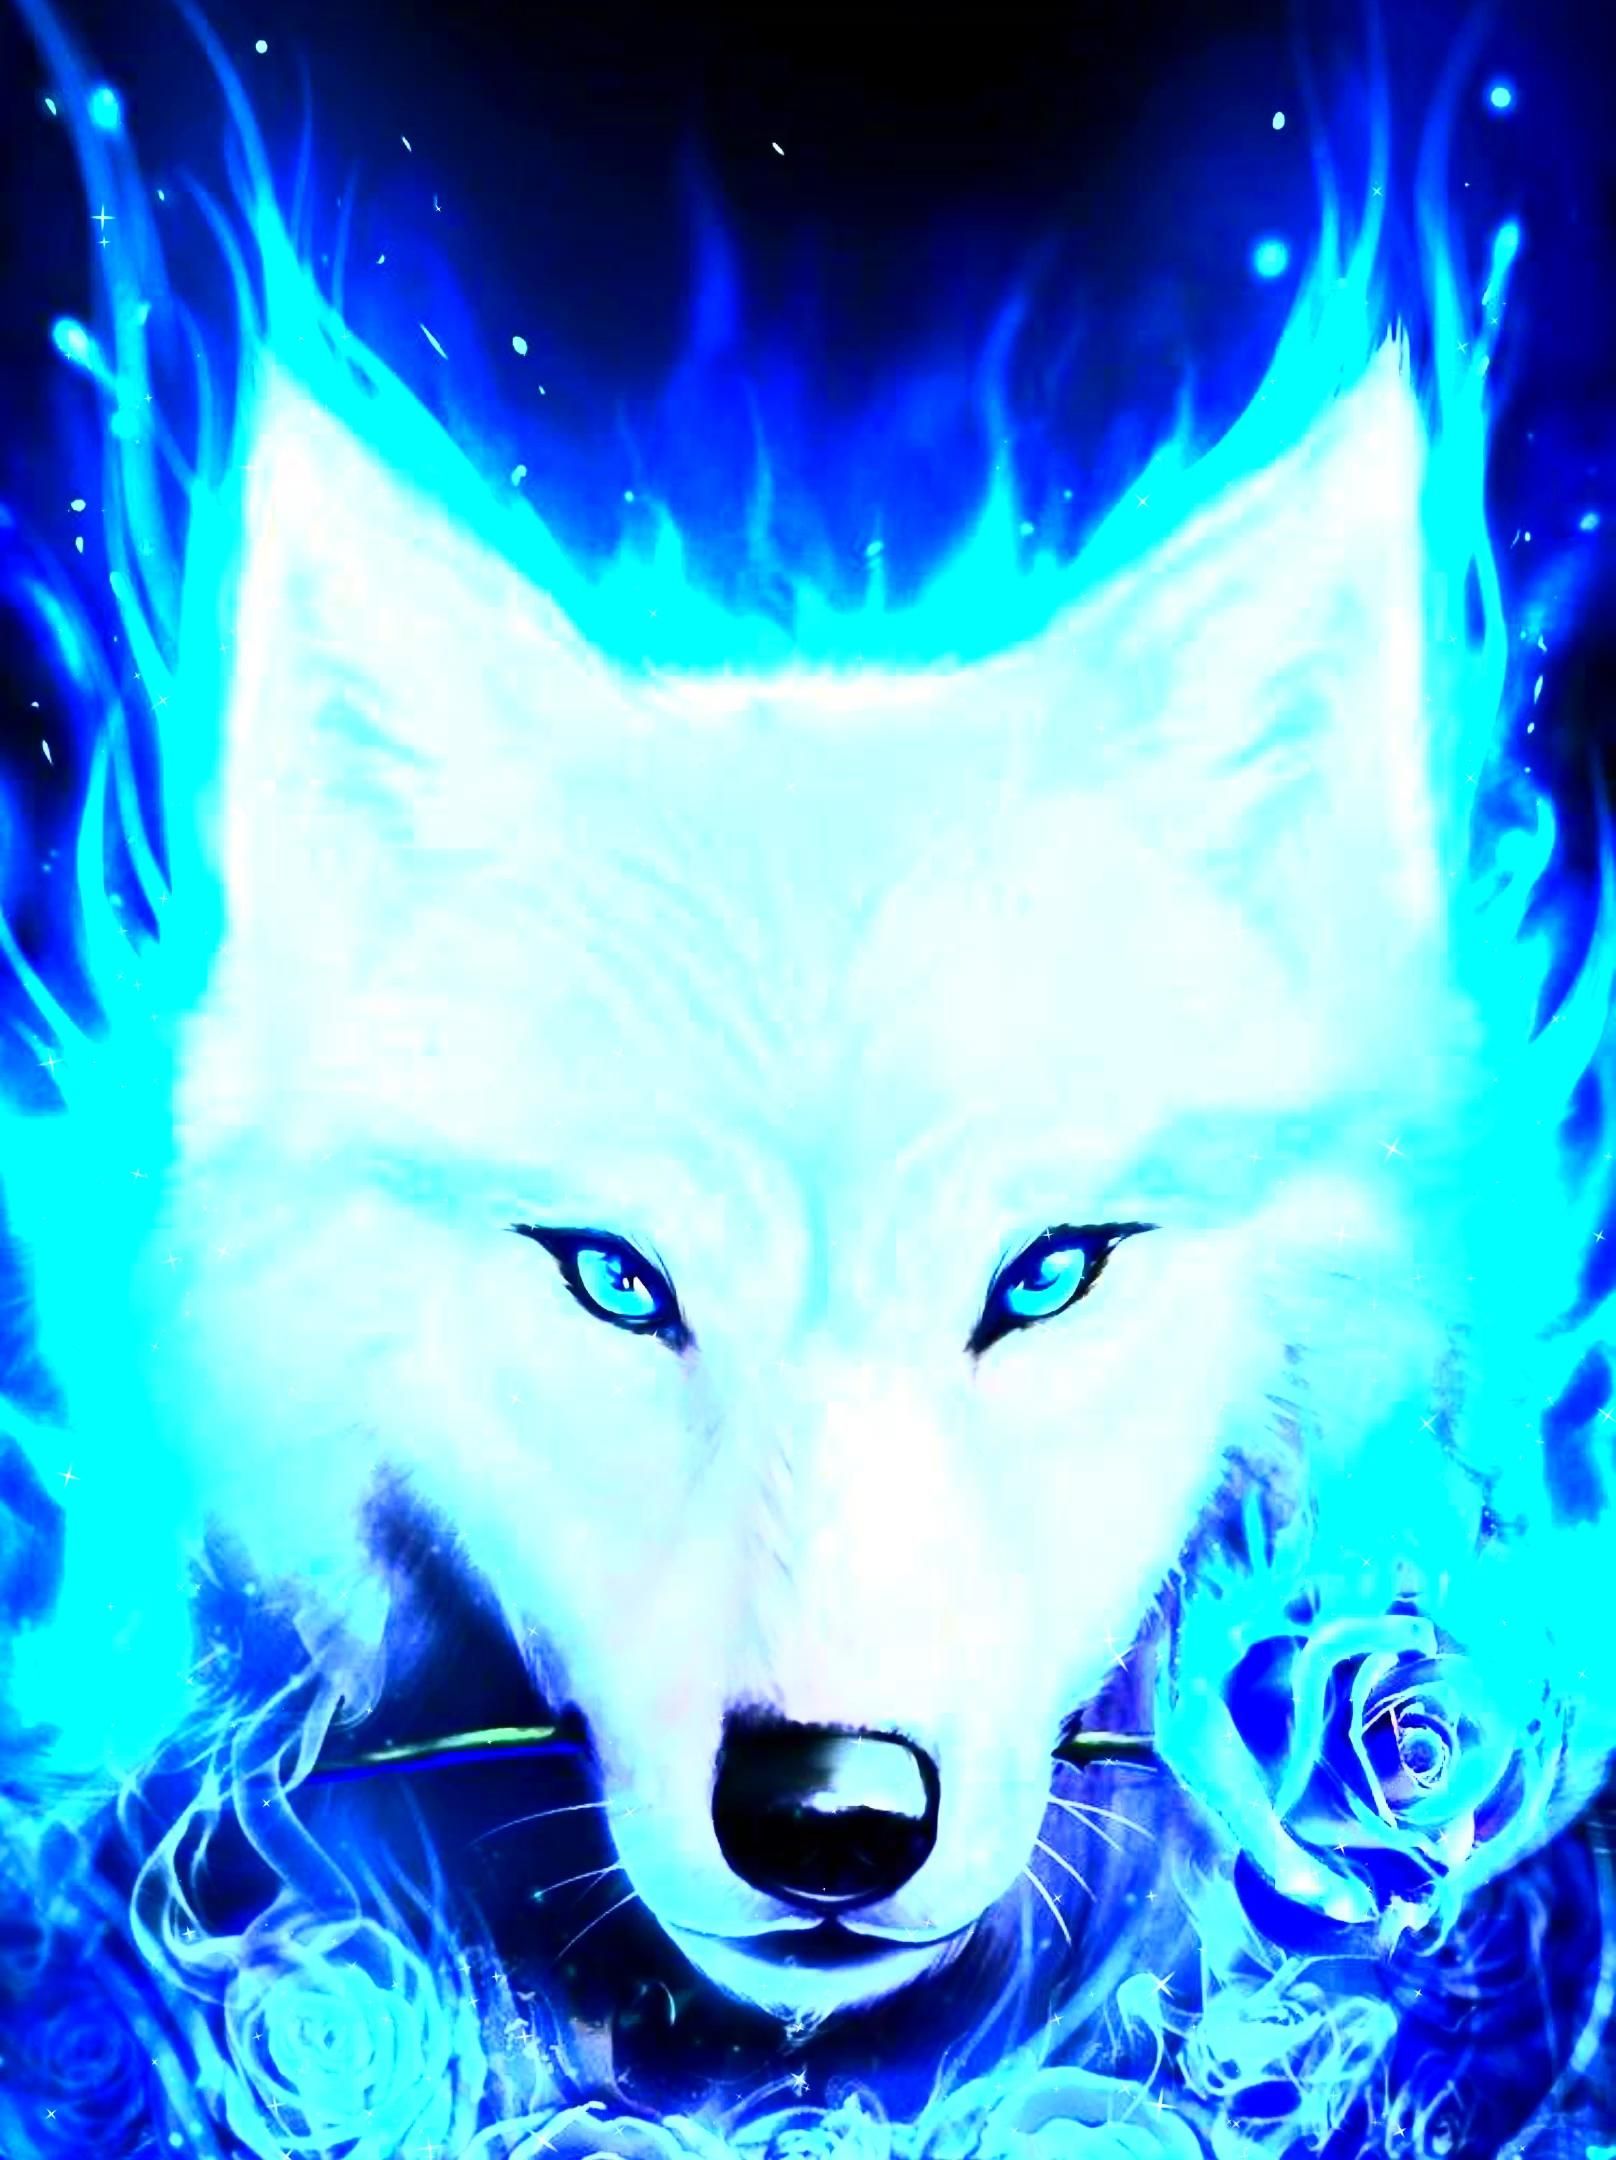 2020 Digital Art Alive. Wolf spirit animal, Spirit animal art, Cute animal drawings